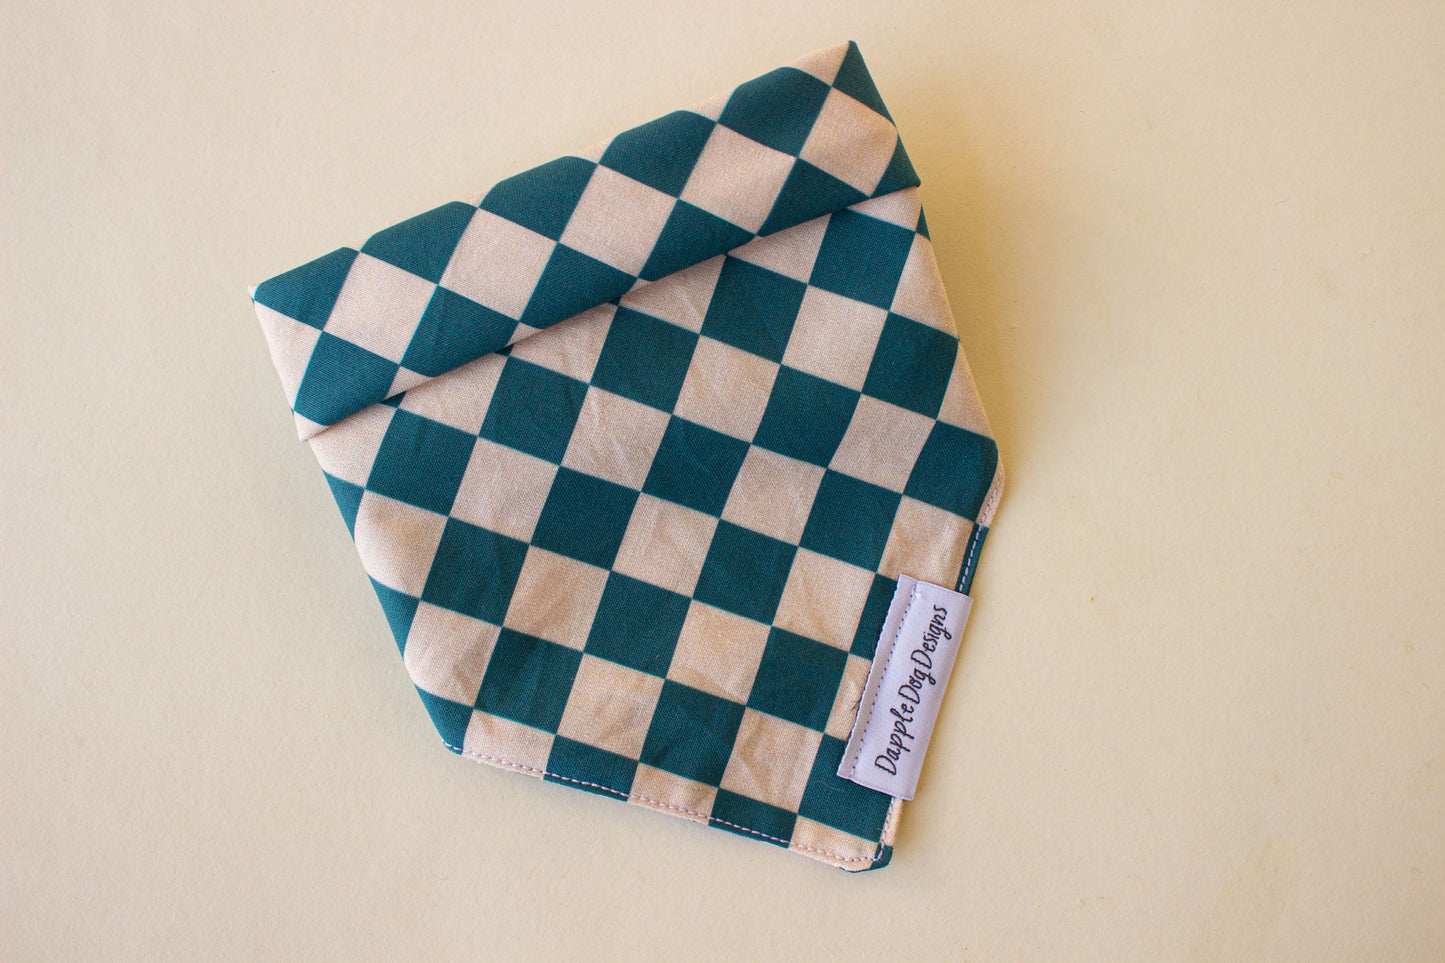 Blue Checkered Bandana